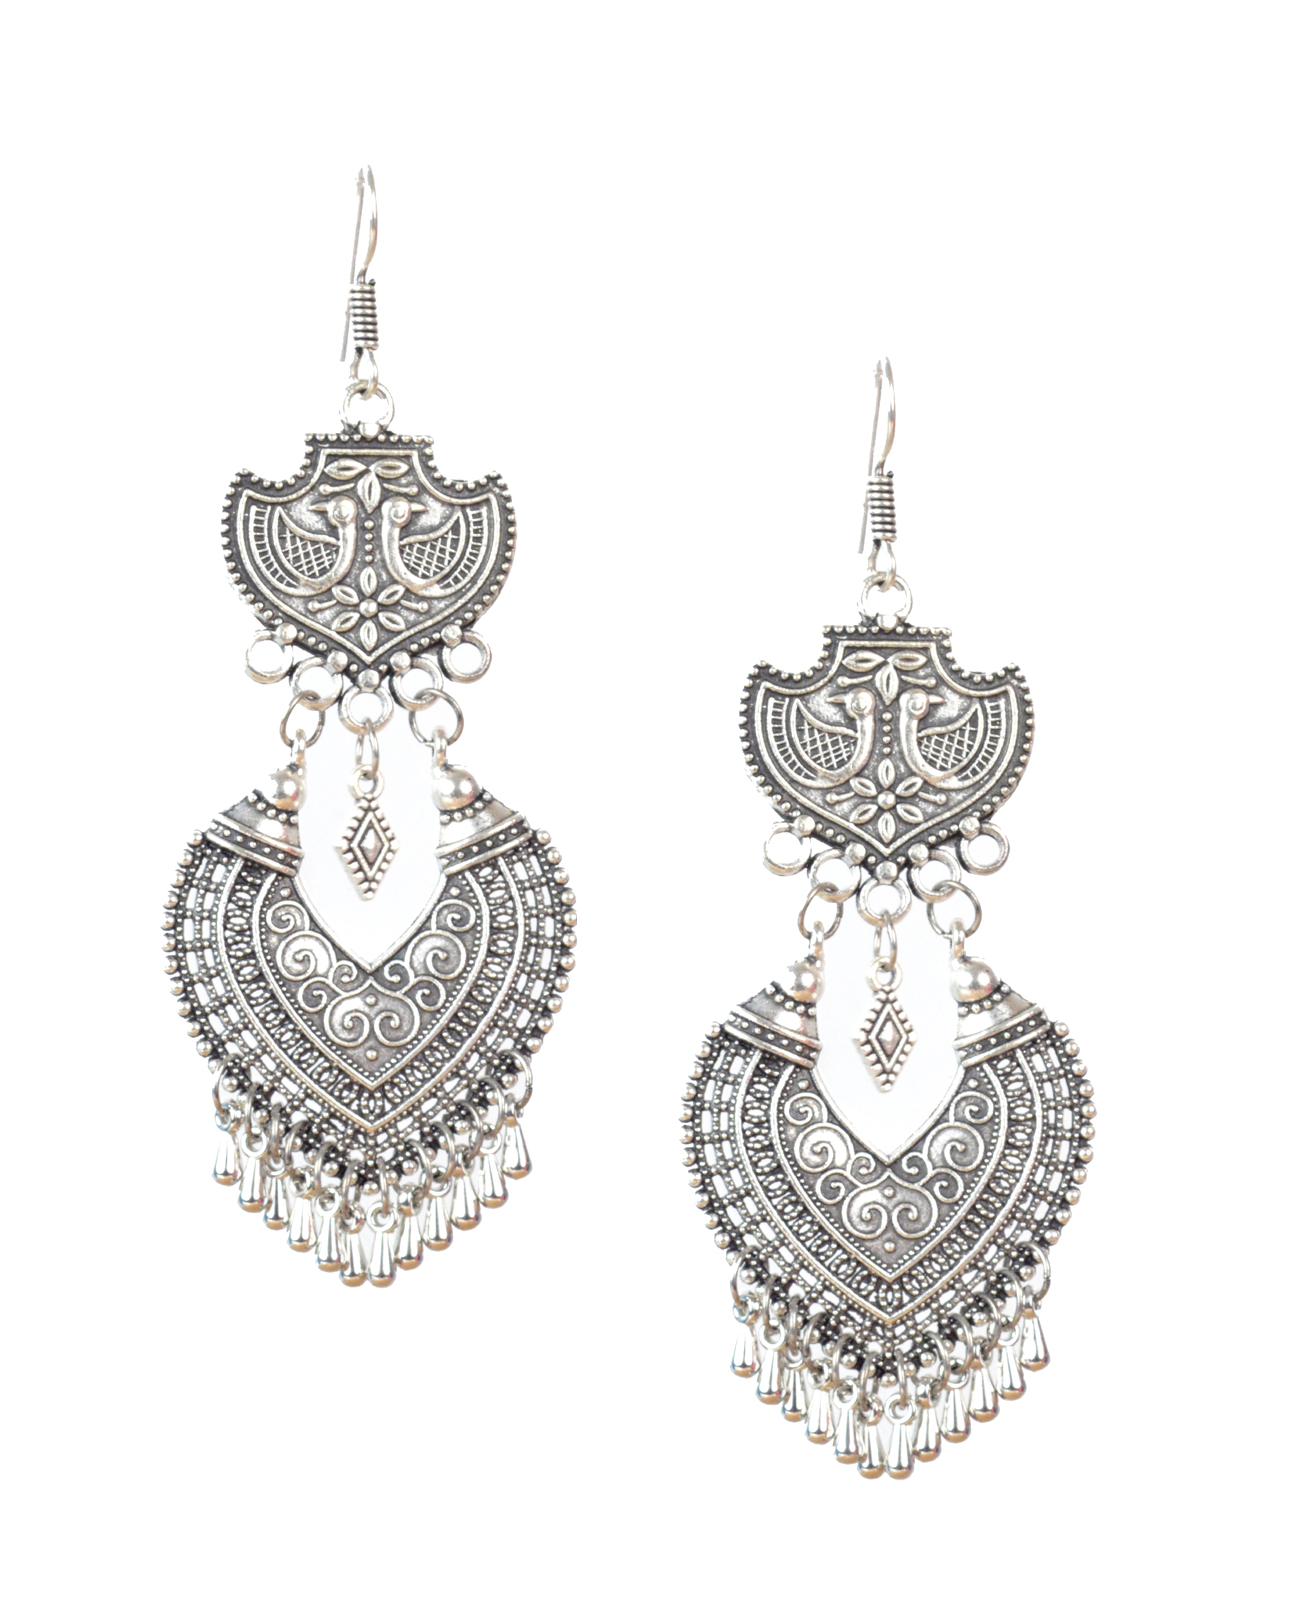 Handmade Oxidised Silver Fashion Earrings Indian Jewellery Nisuj